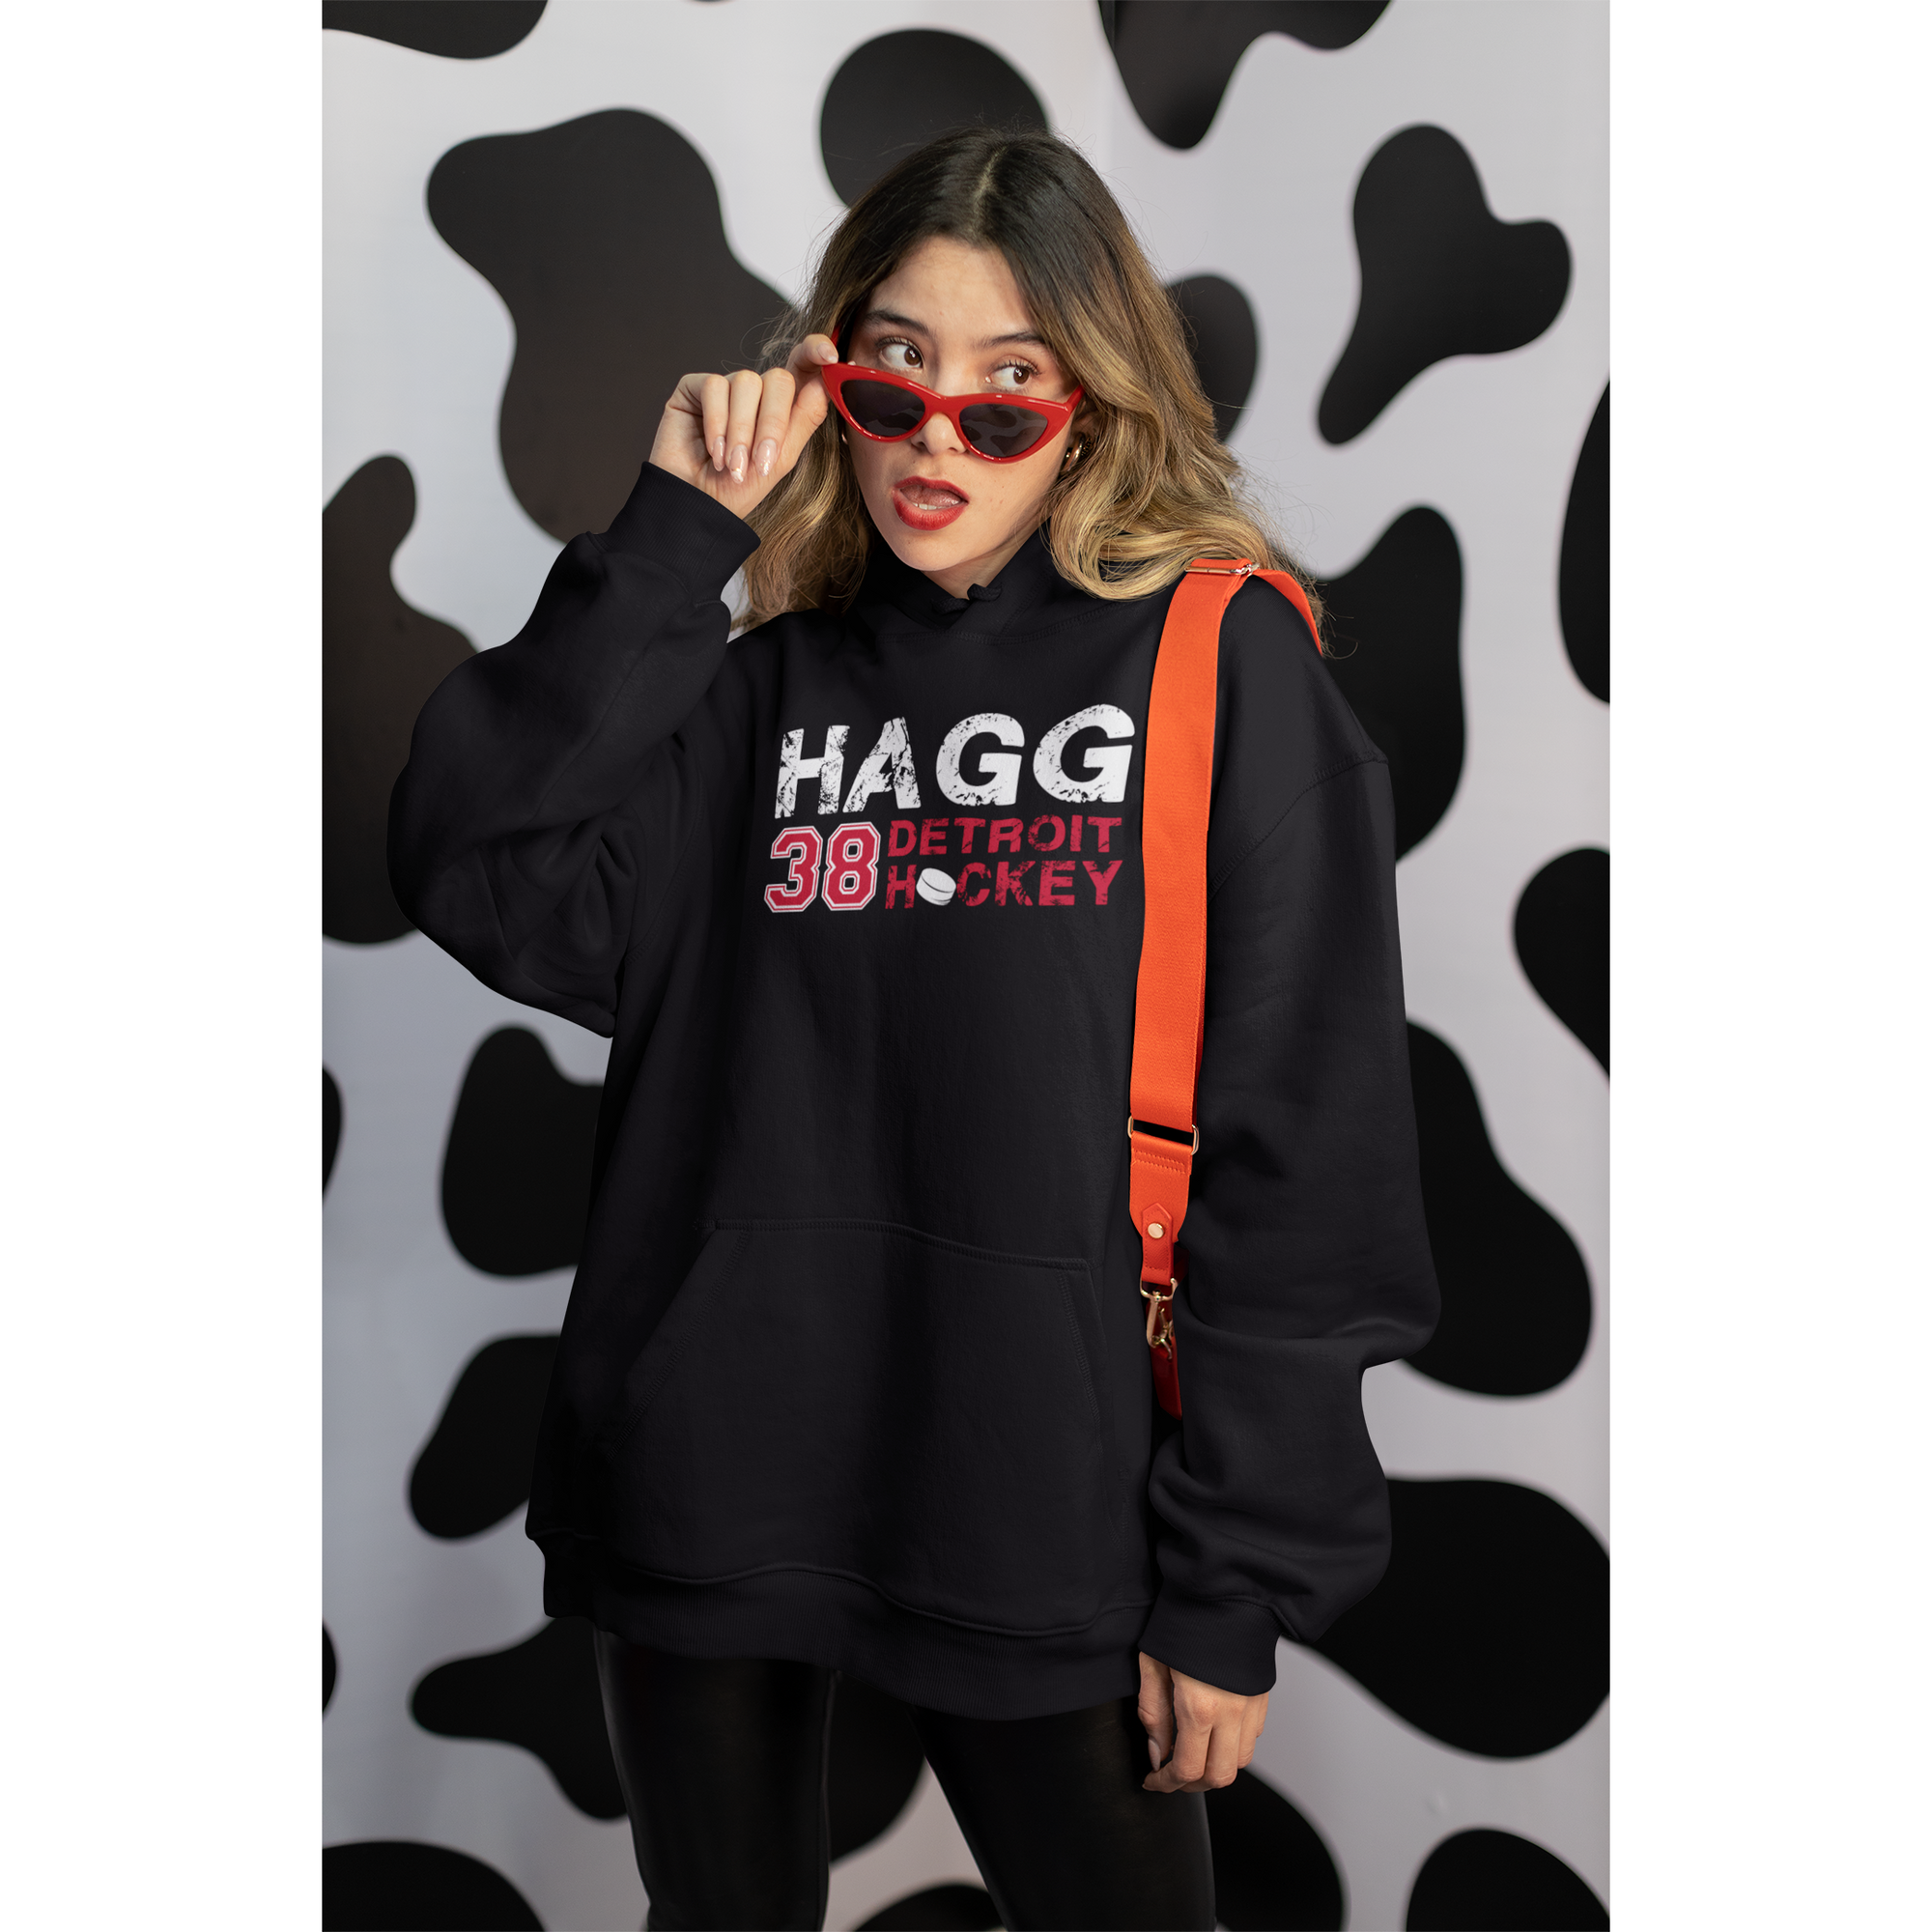 Hagg 38 Detroit Hockey Unisex Hooded Sweatshirt